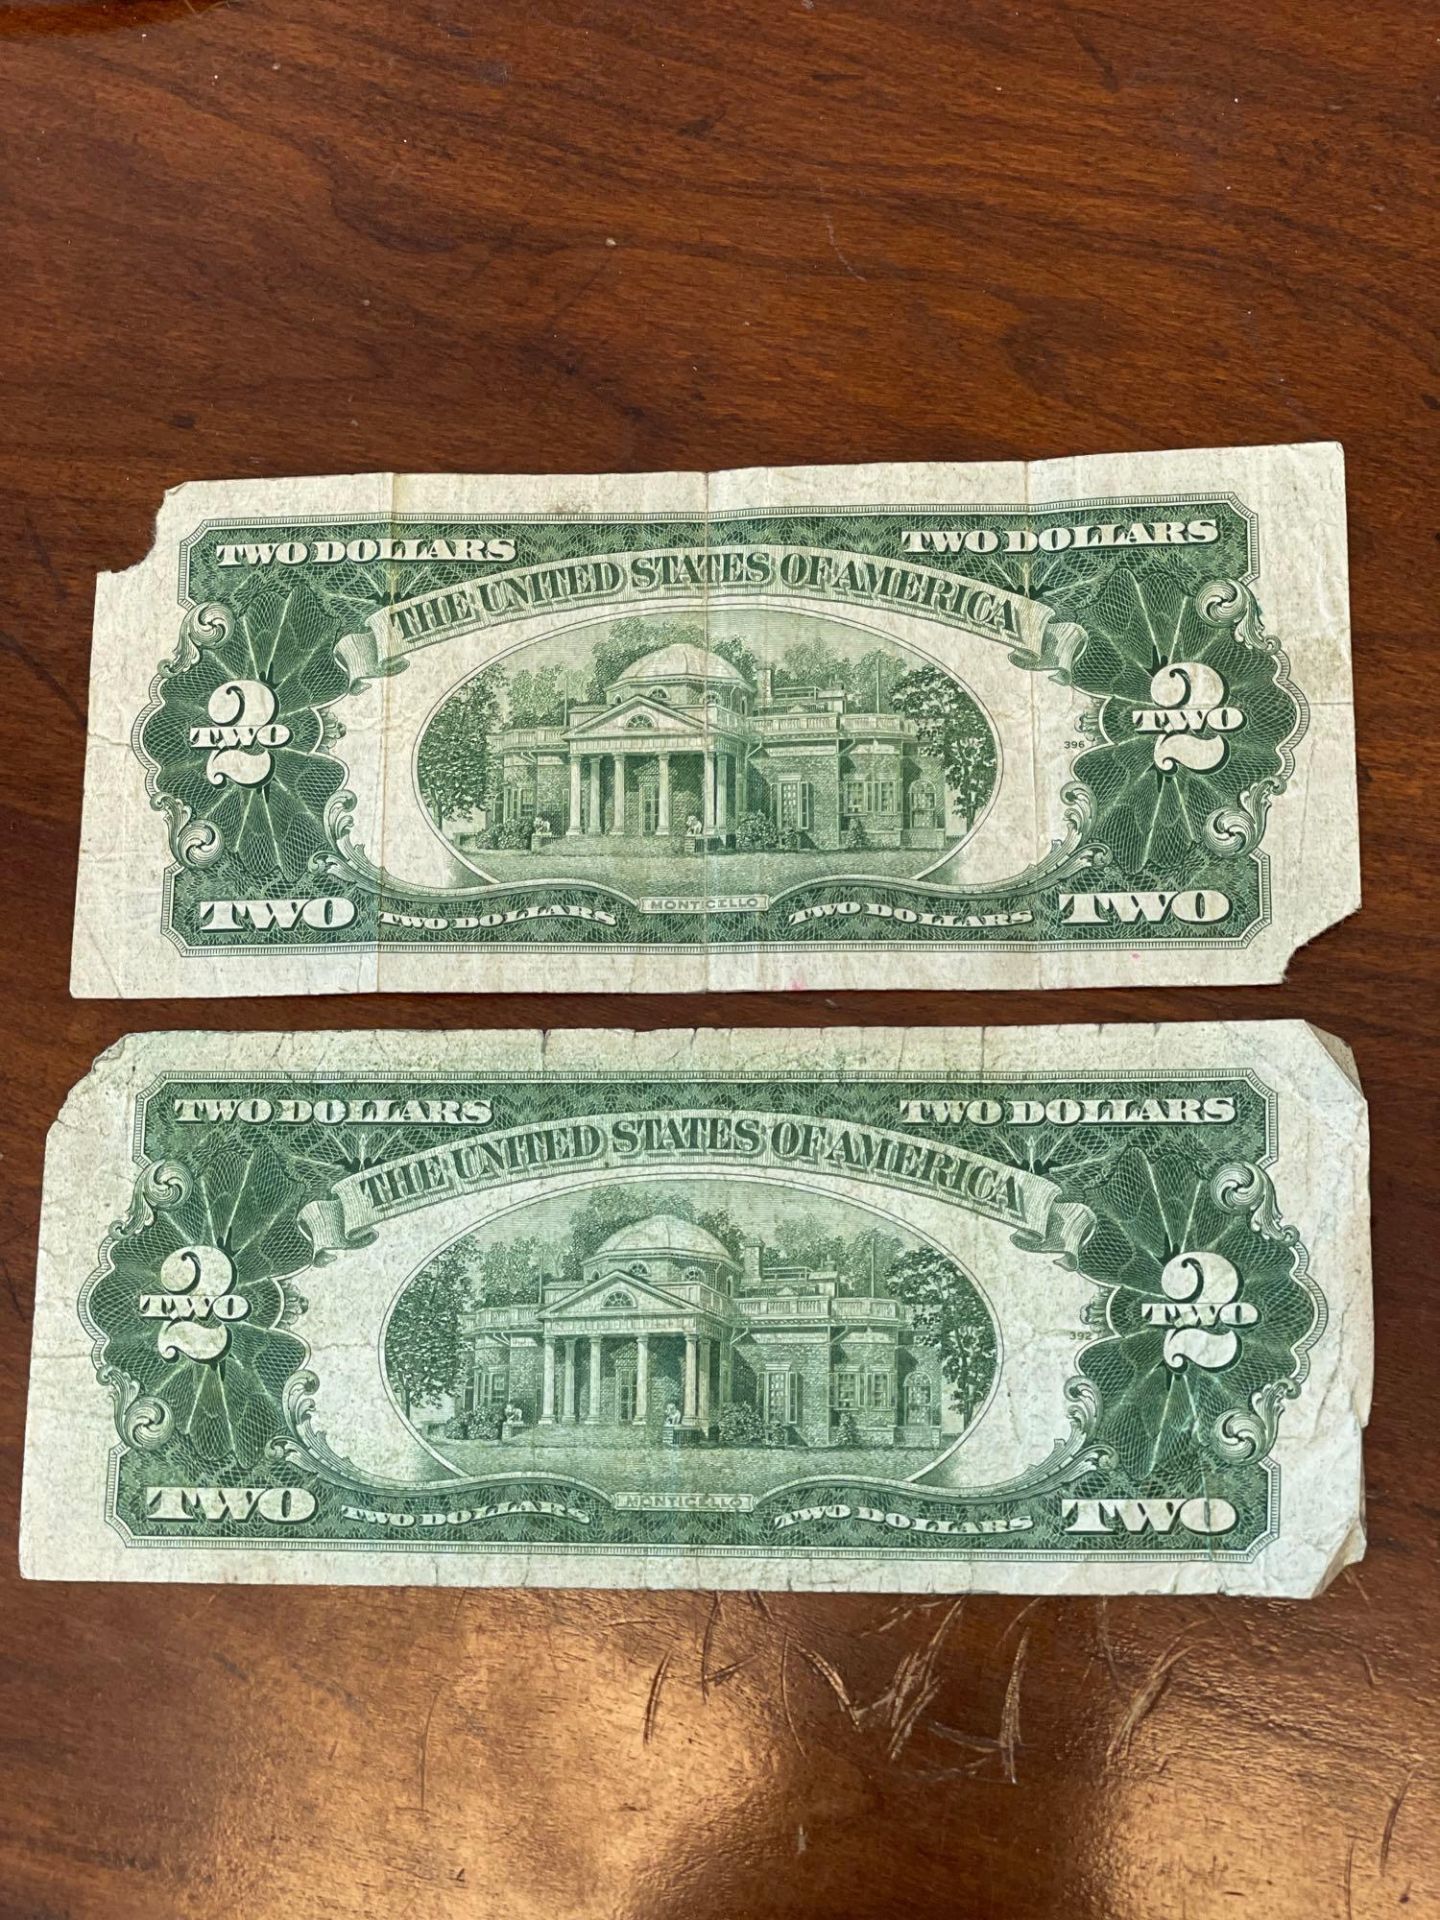 2 1953 Red Seal 2 Dollar Bills - Image 3 of 3